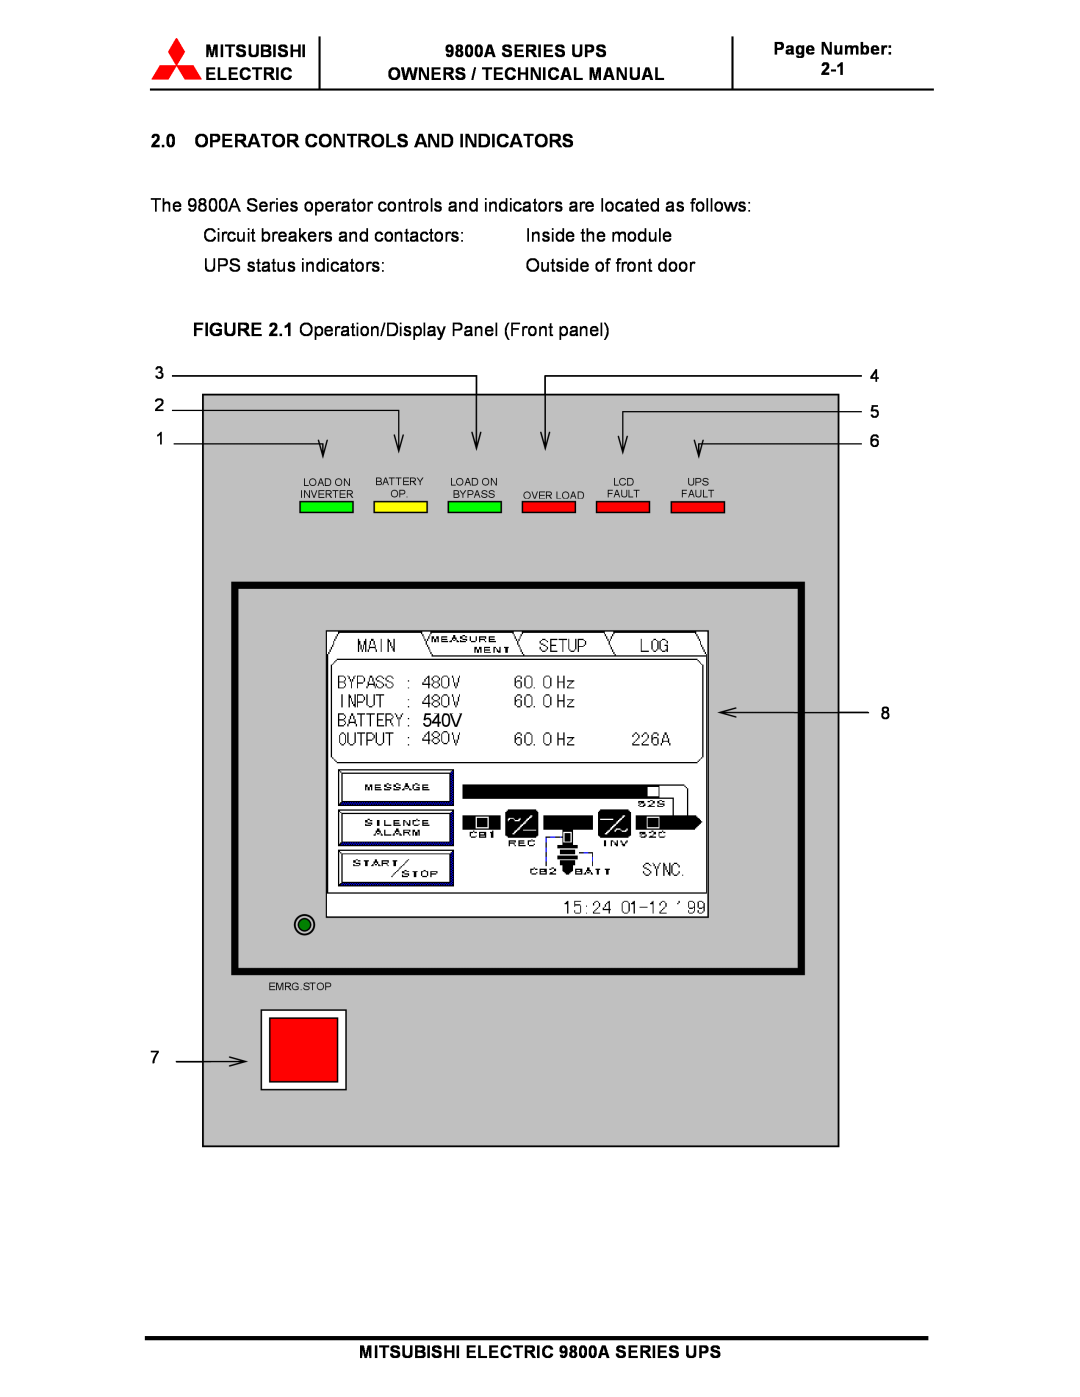 Mitsubishi 9800A Series Operator Controls And Indicators, Mitsubishi Electric, 9800A SERIES UPS OWNERS / TECHNICAL MANUAL 